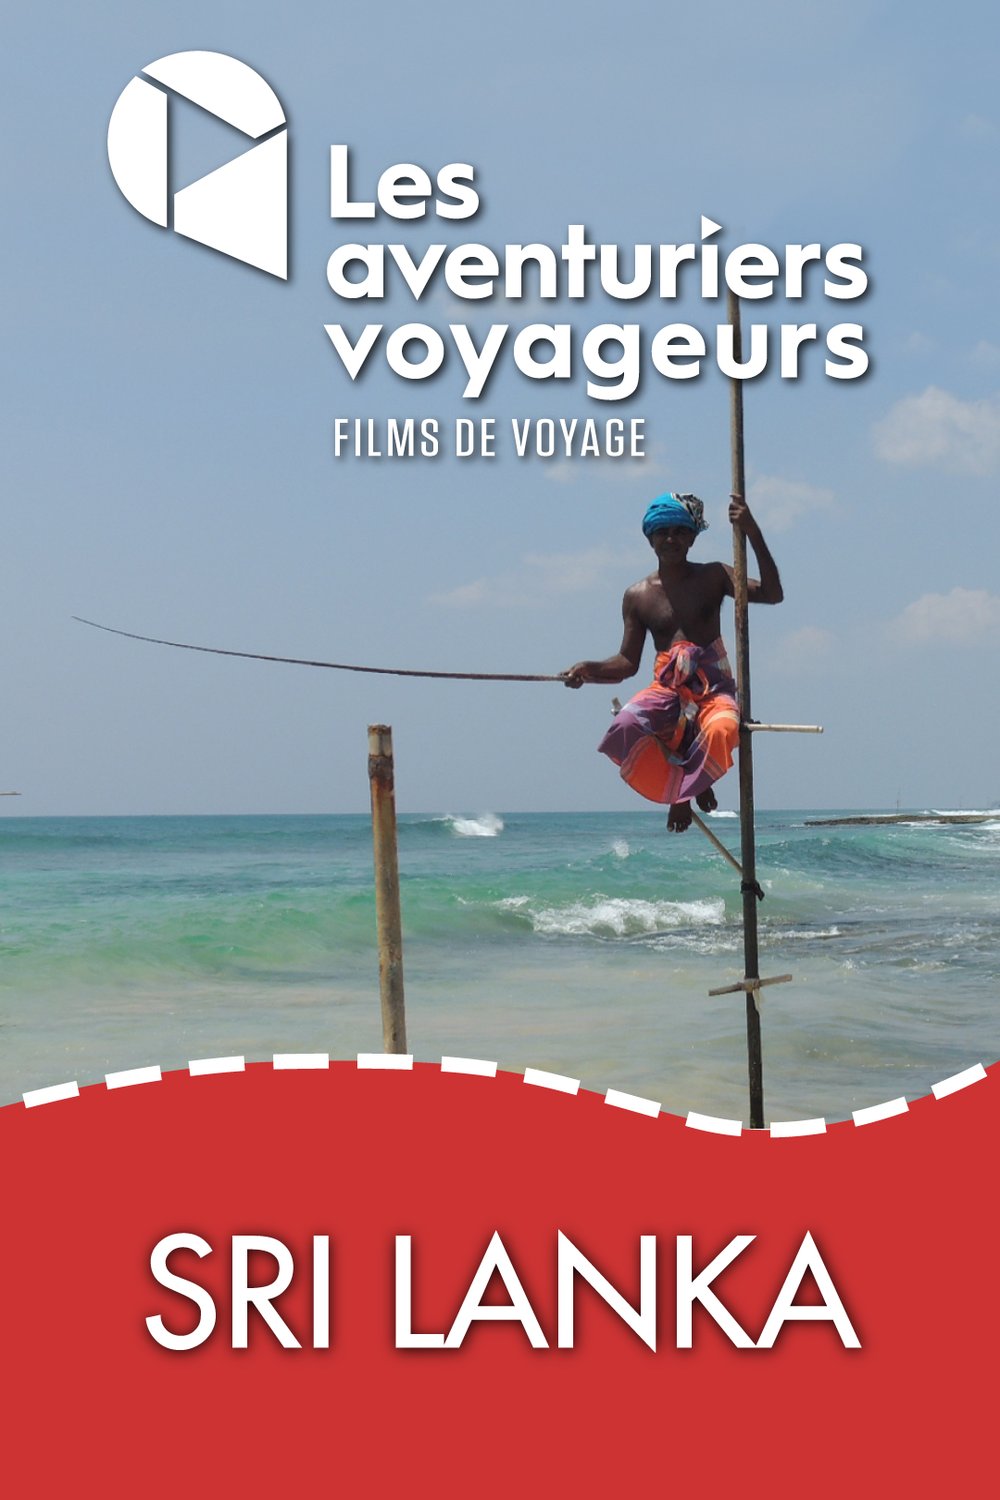 Poster of the movie Les aventuriers voyageurs: Sri Lanka